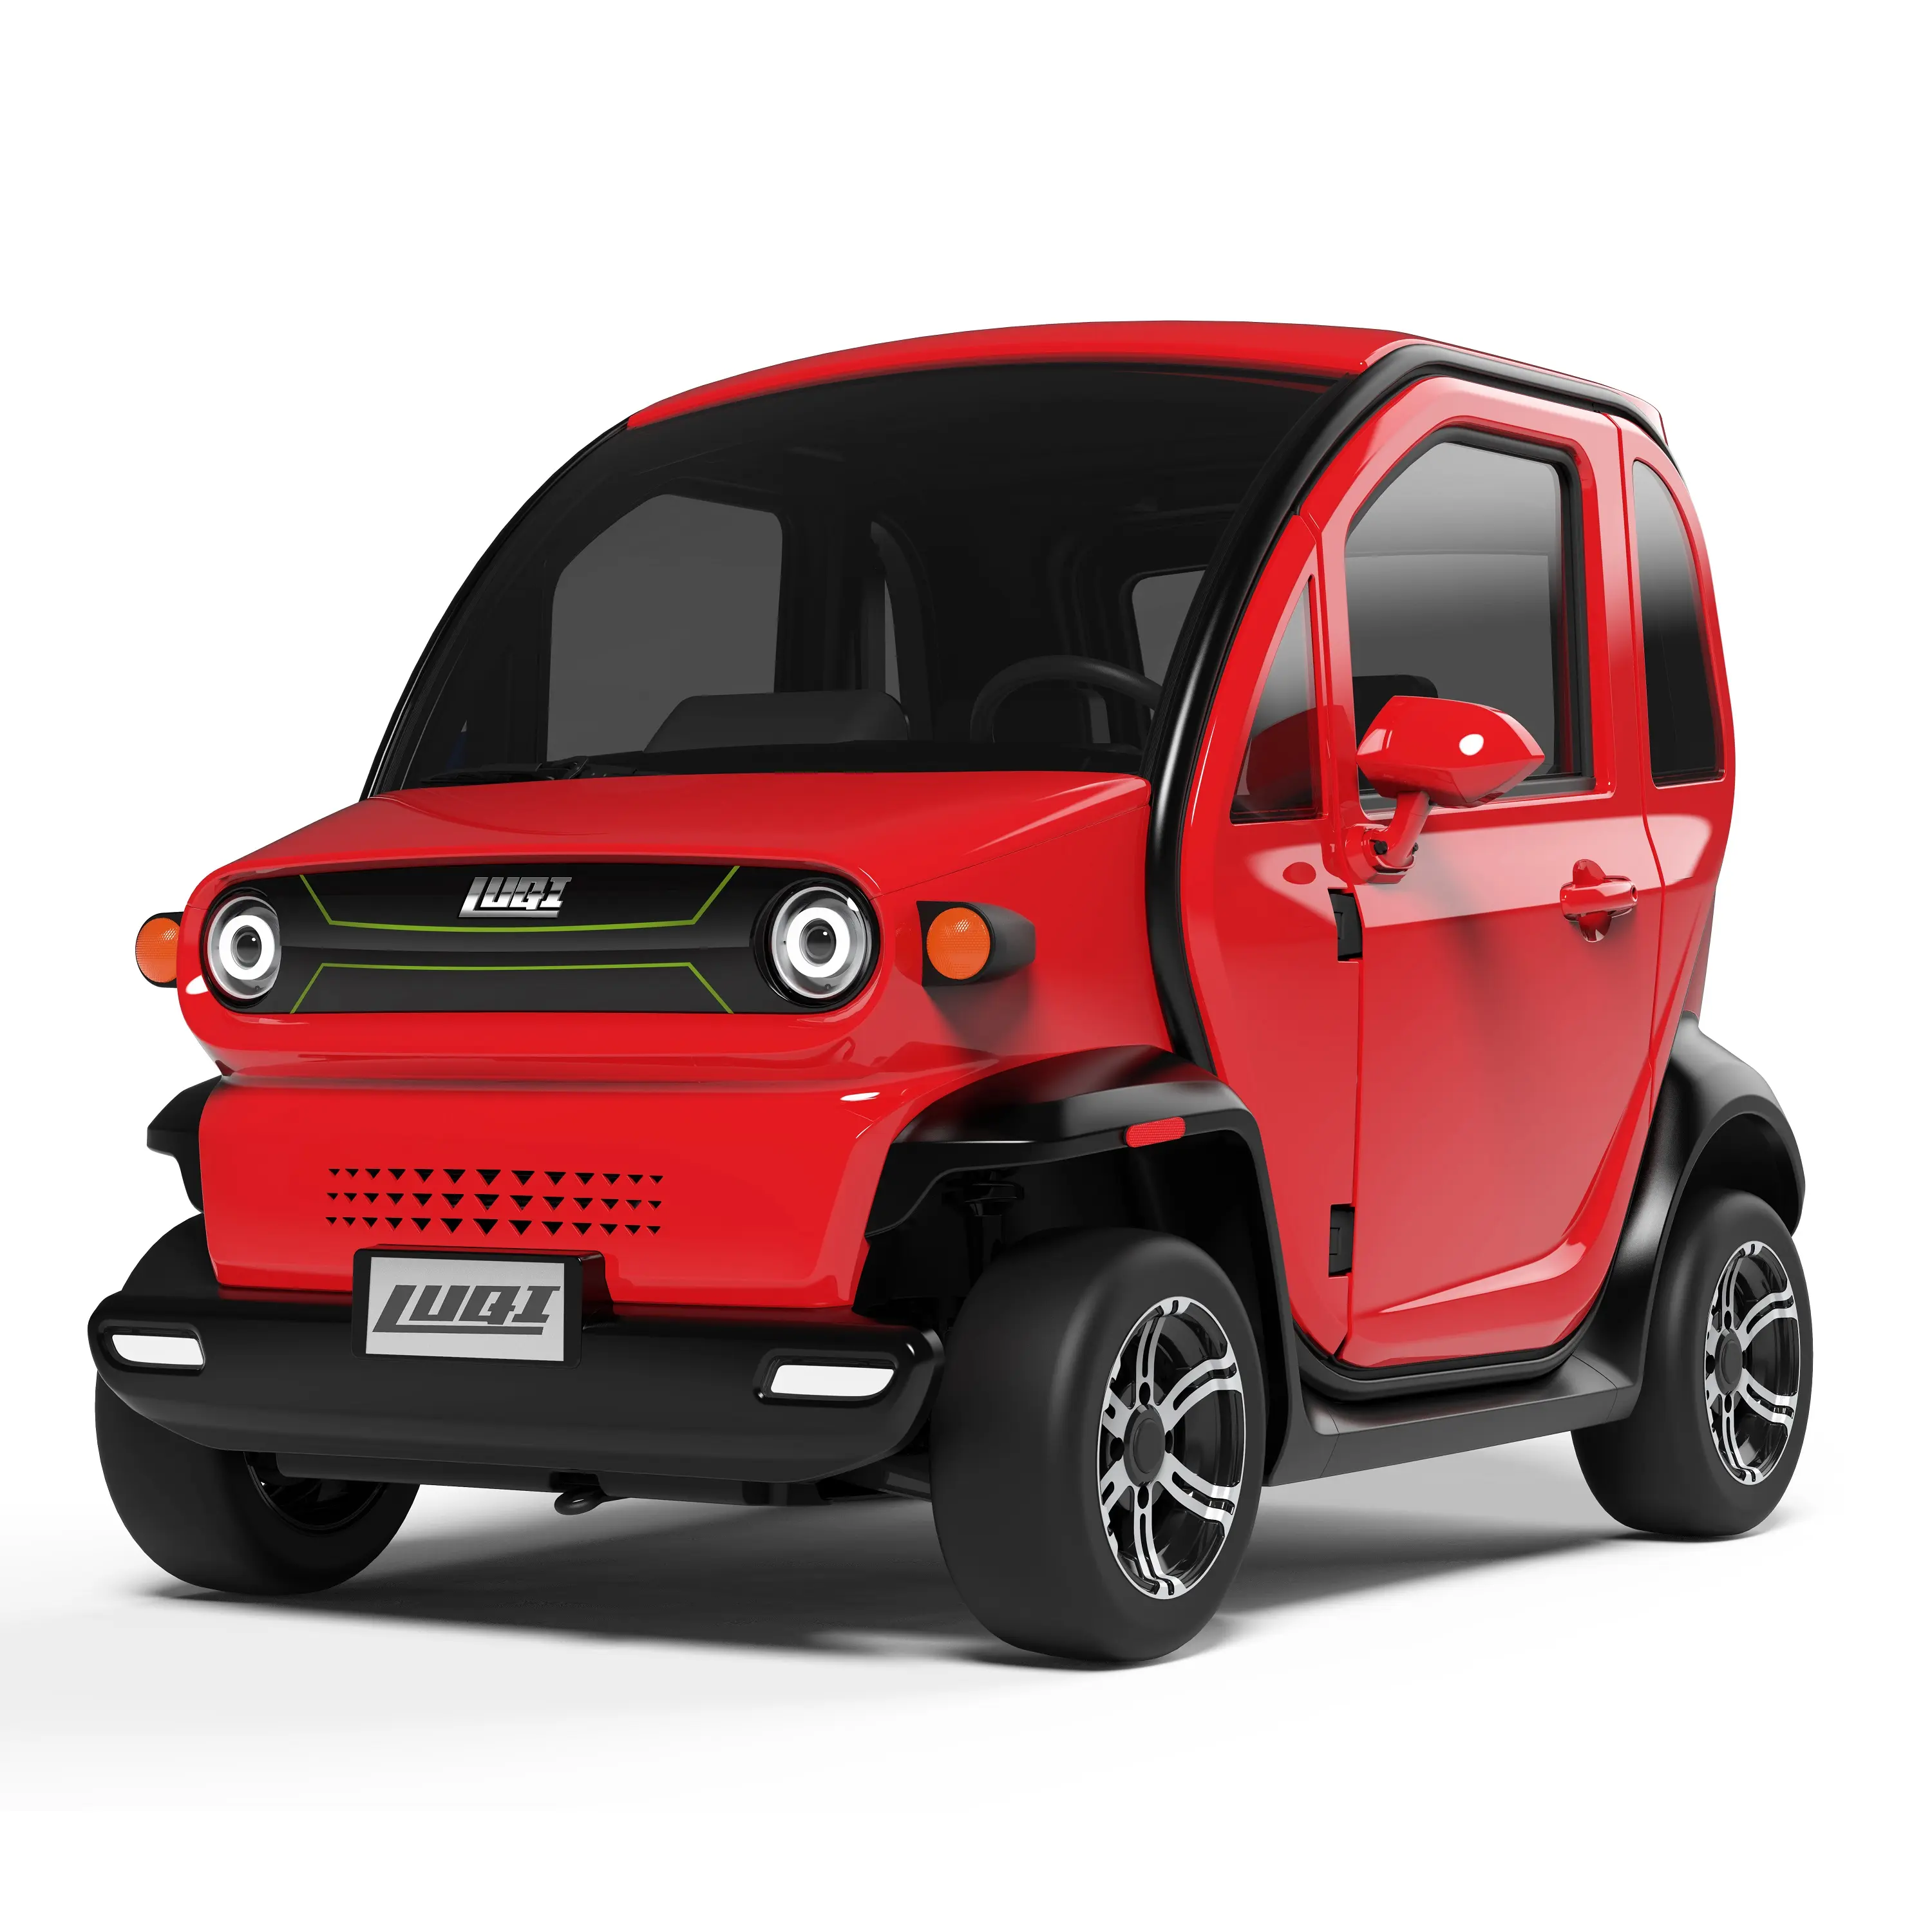 EEC COC L6e証明書電気シティカー電気モペット車両、2人乗りビッグバッテリー100ahリチウムバッテリー電気自動車